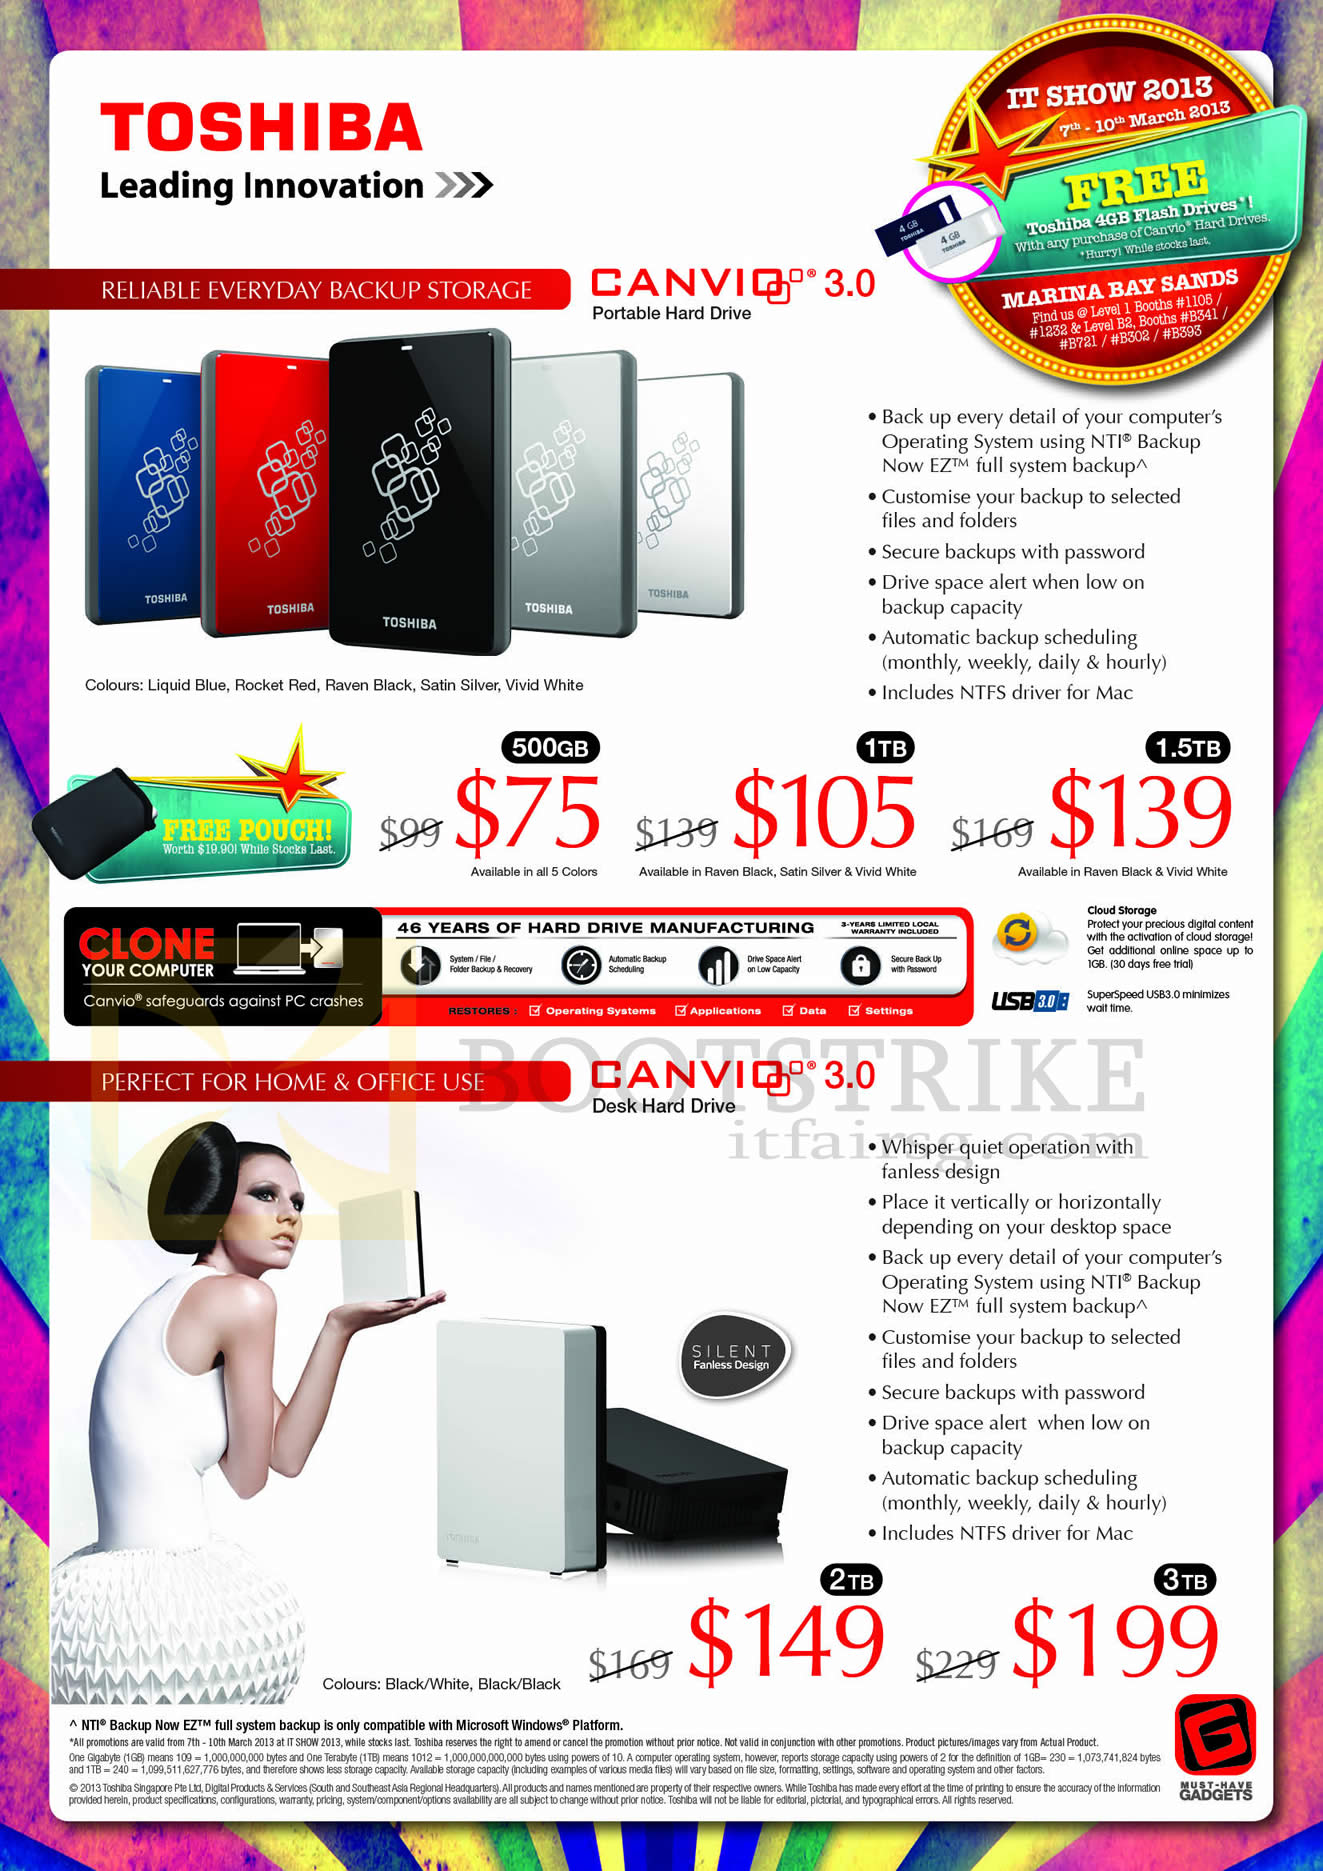 IT SHOW 2013 price list image brochure of Toshiba External Storage Canvio Portable Hard Disk Drive 3.0, Desk Hard Drive